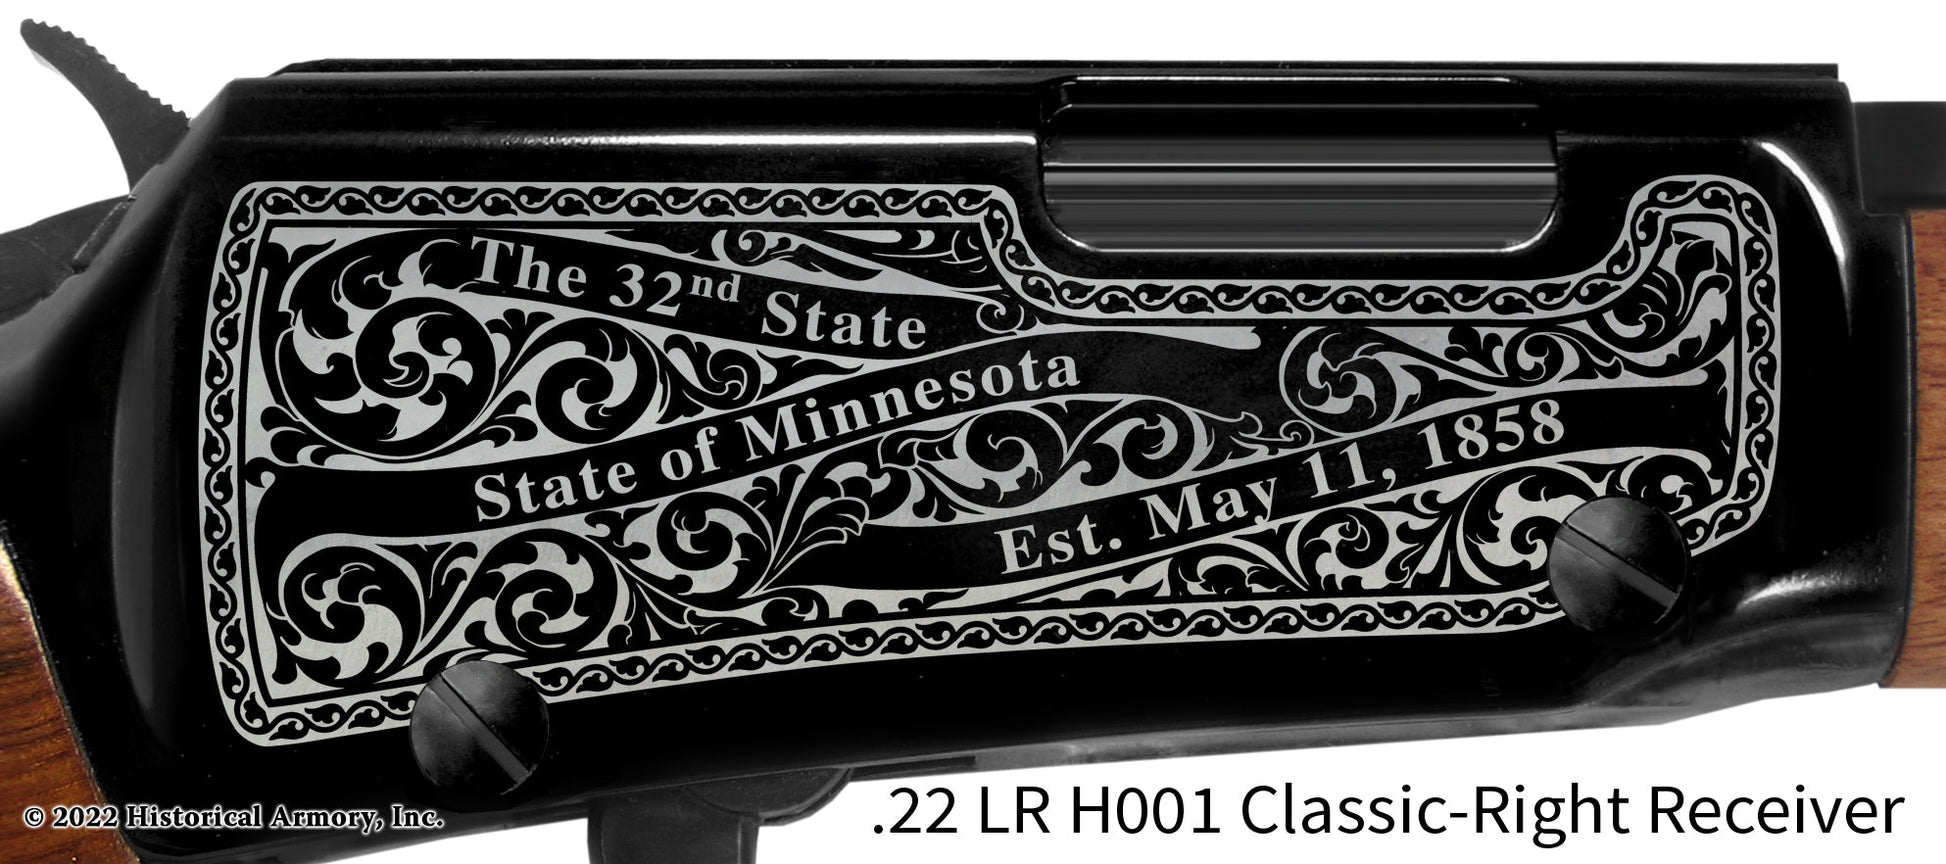 Kittson County Minnesota Engraved Henry H001 Rifle